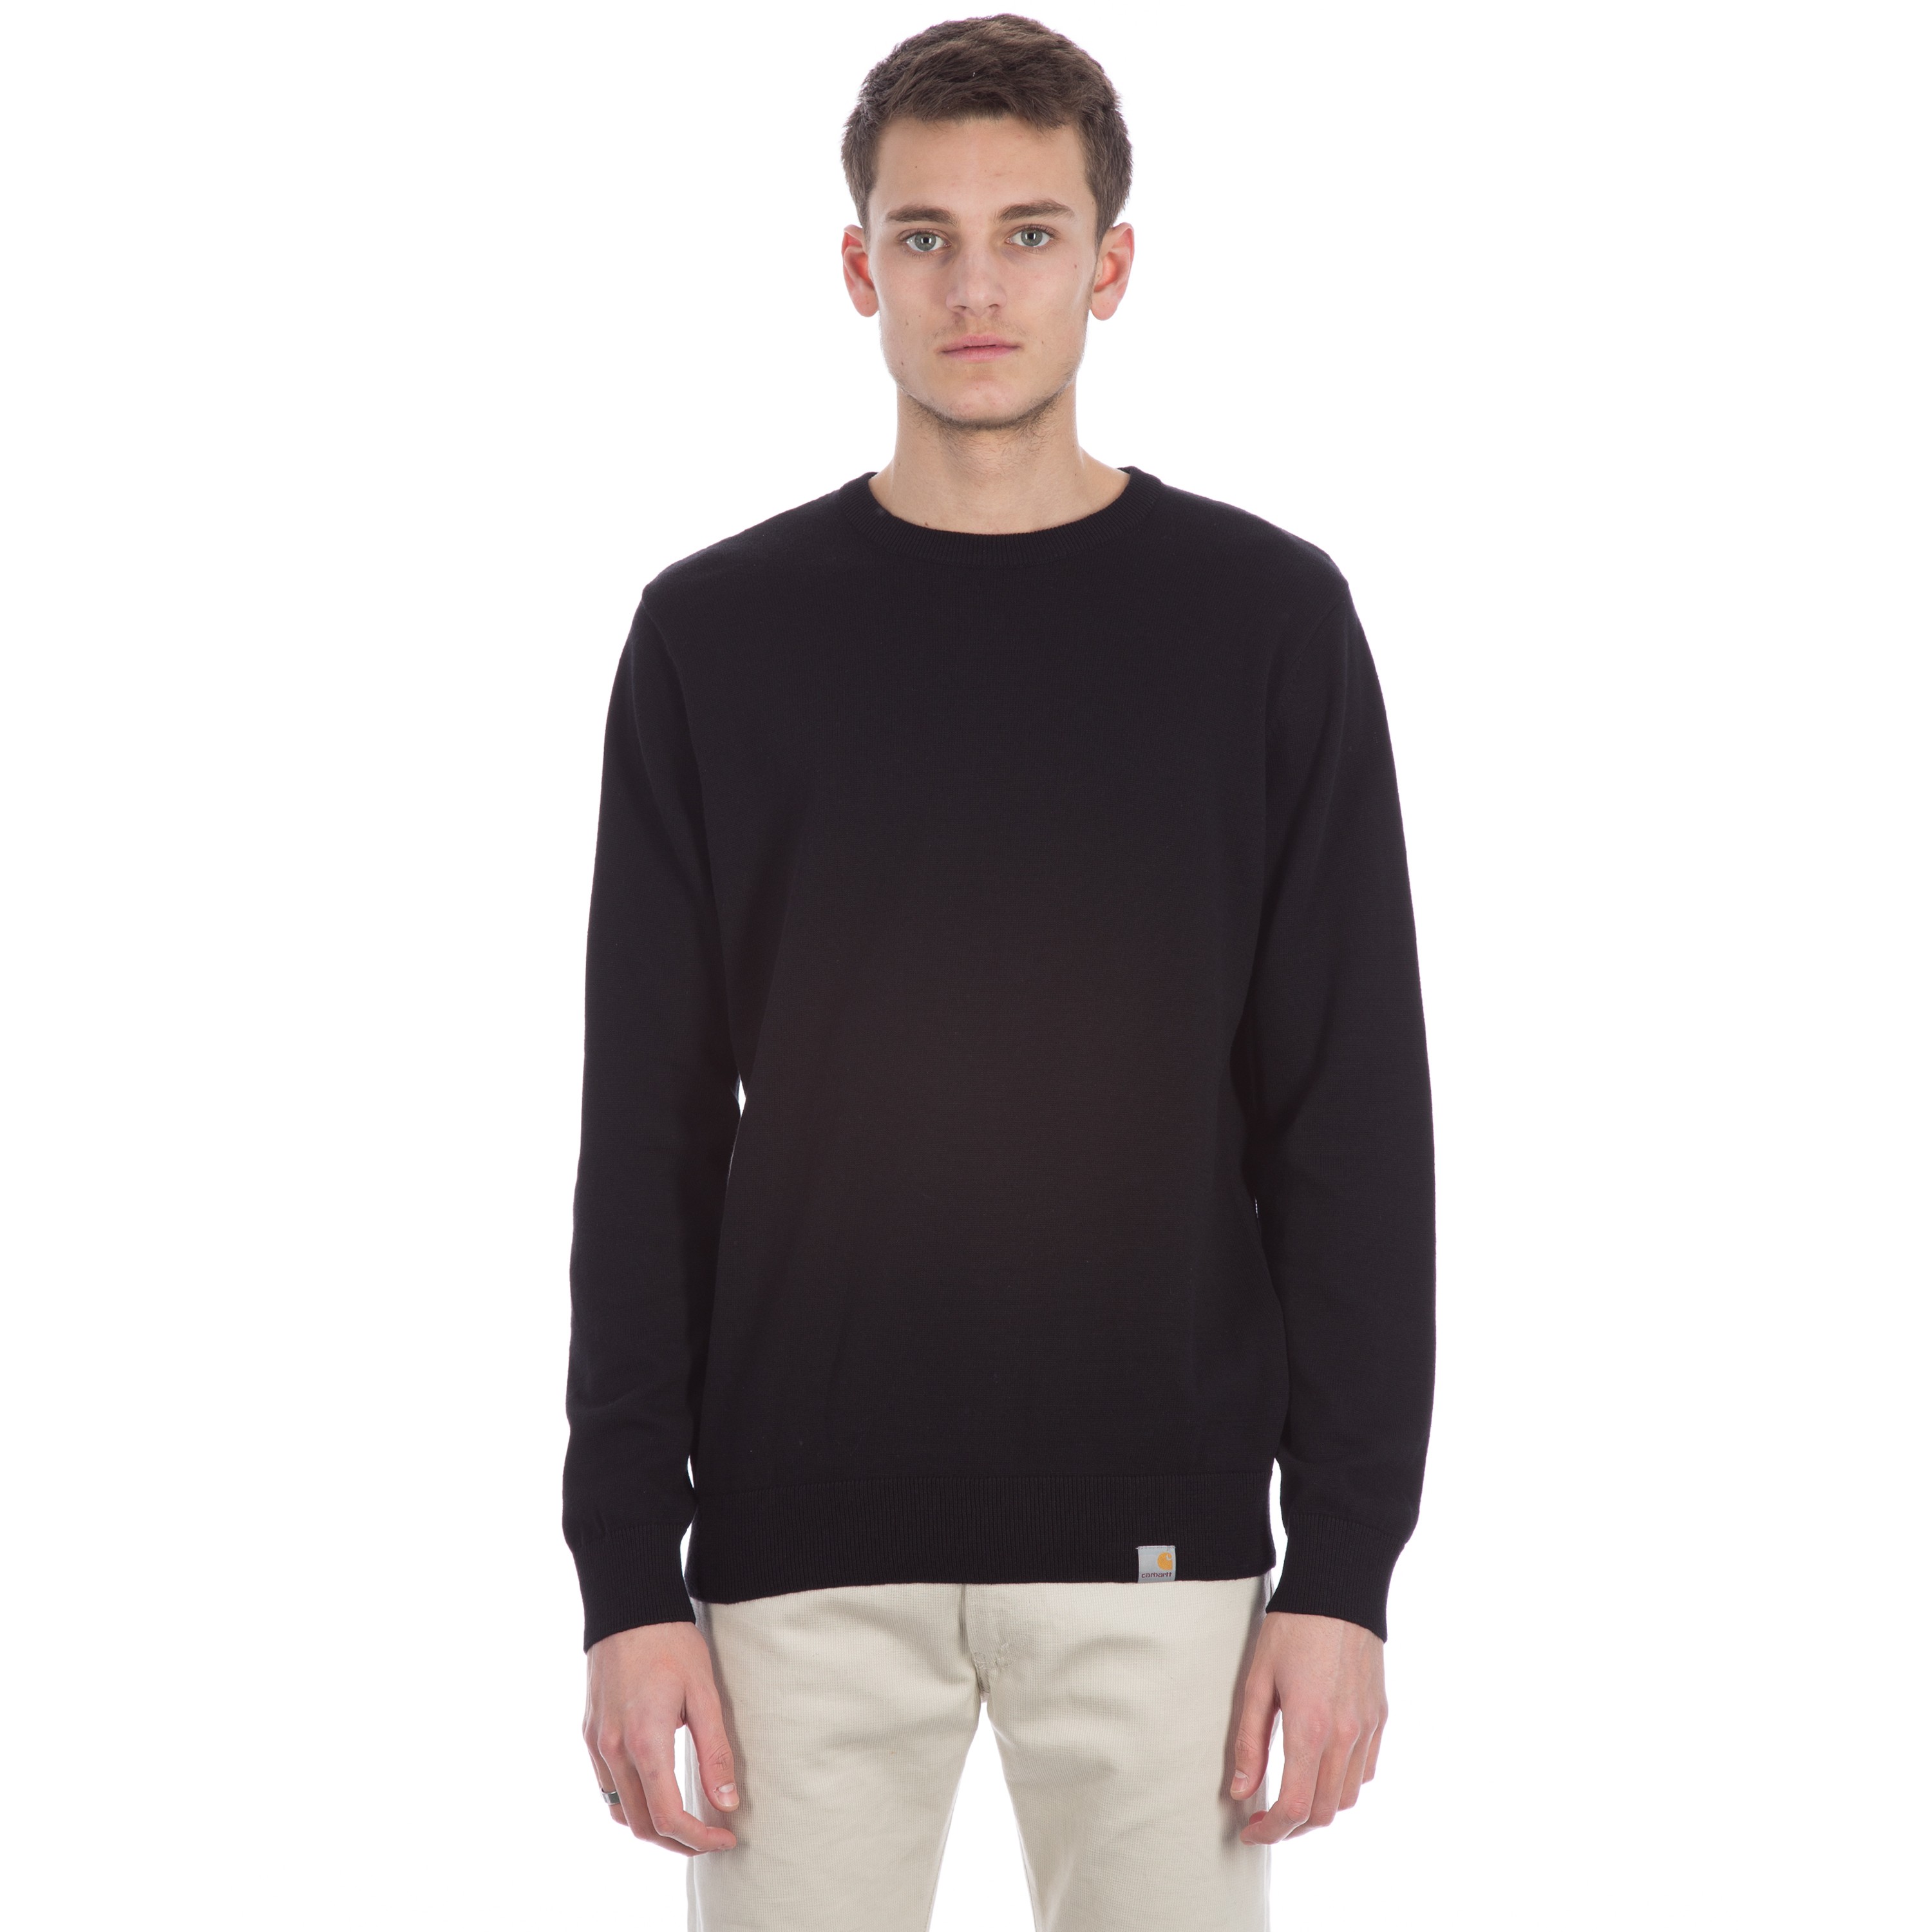 Carhartt Playoff Knitted Sweater (Black) - Consortium.